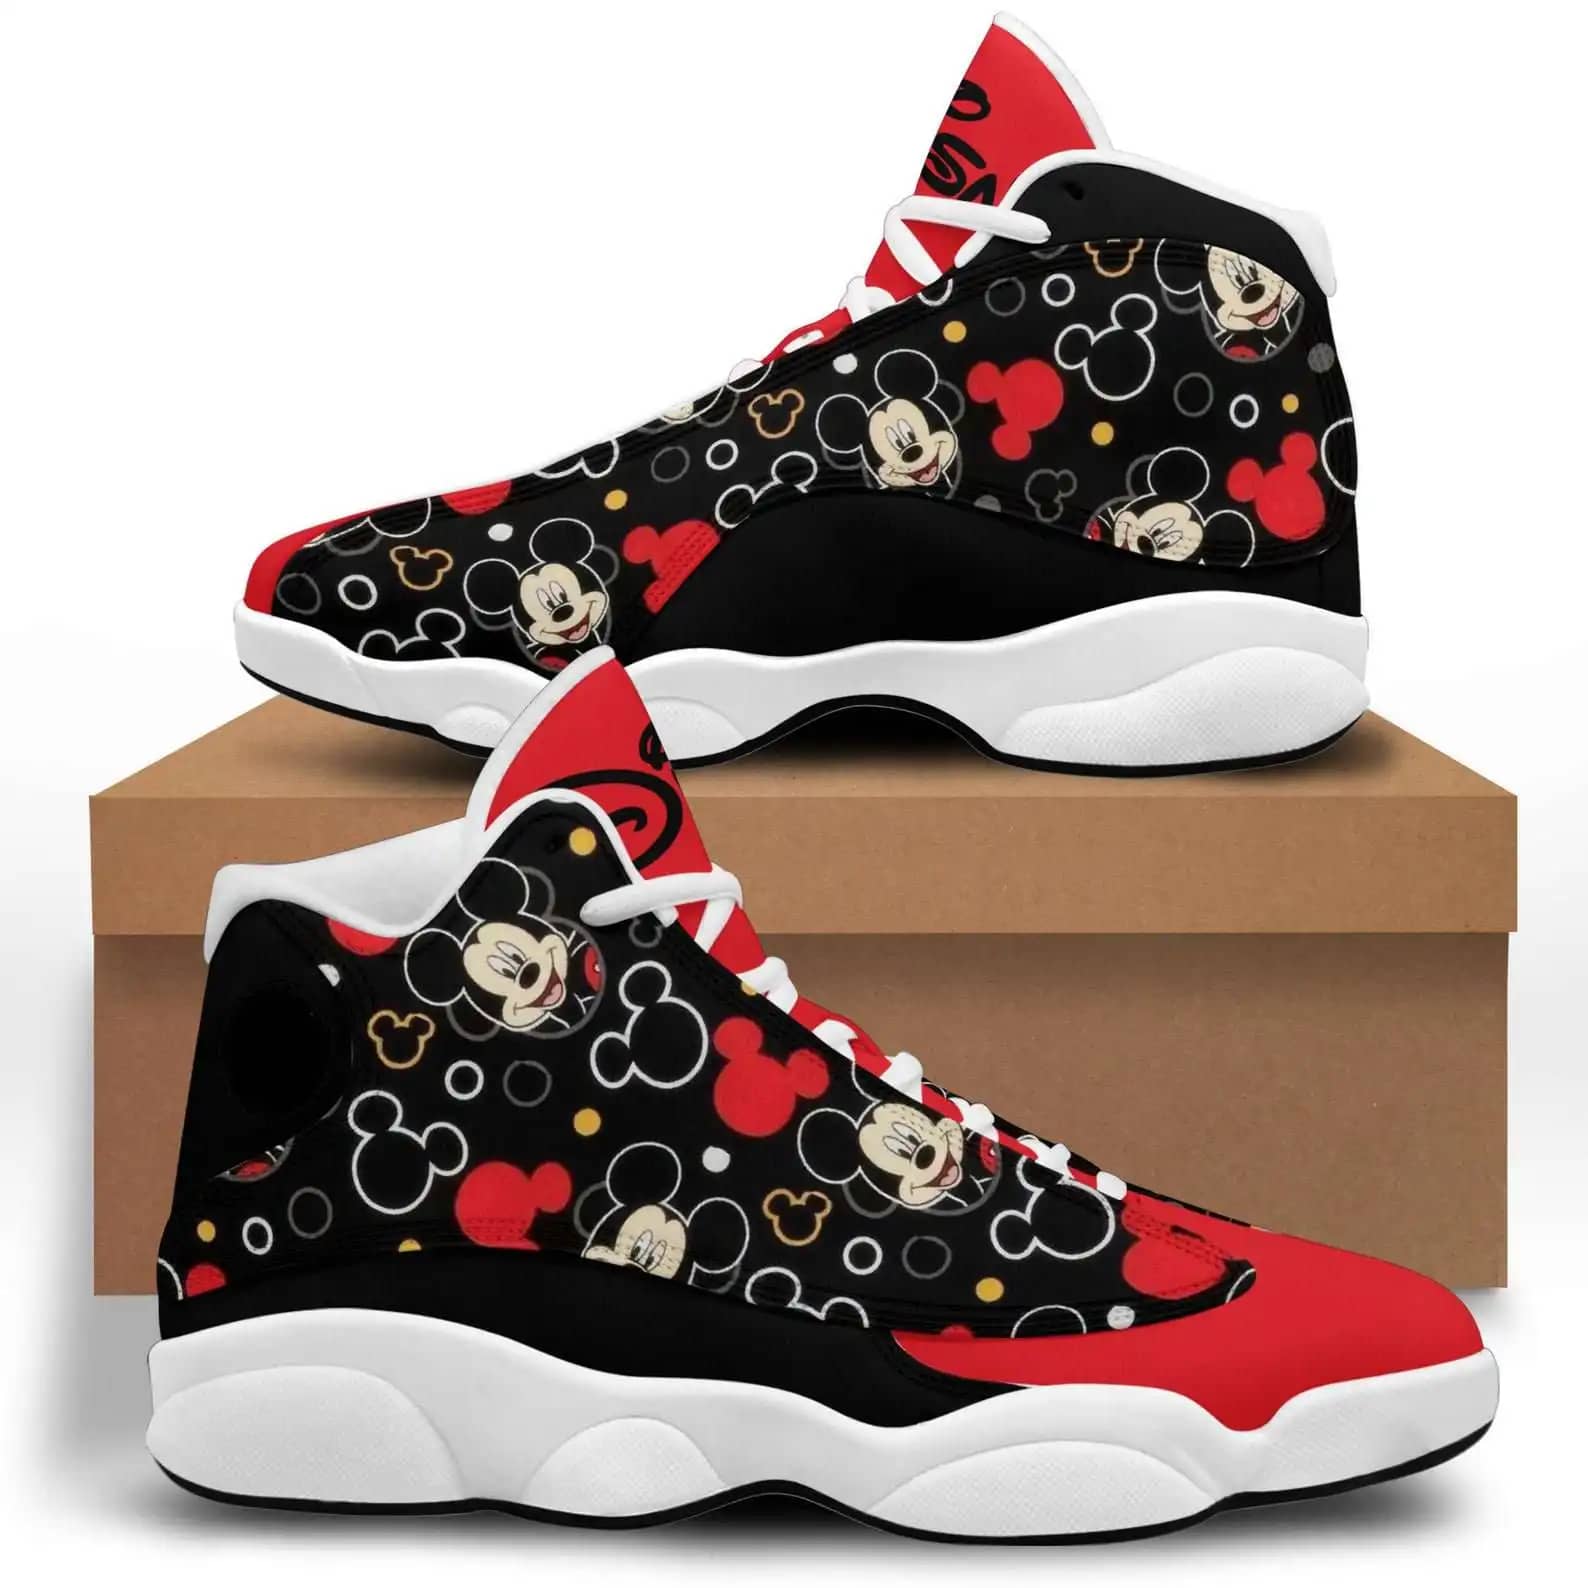 Mickey Mouse Air Jordan Shoes